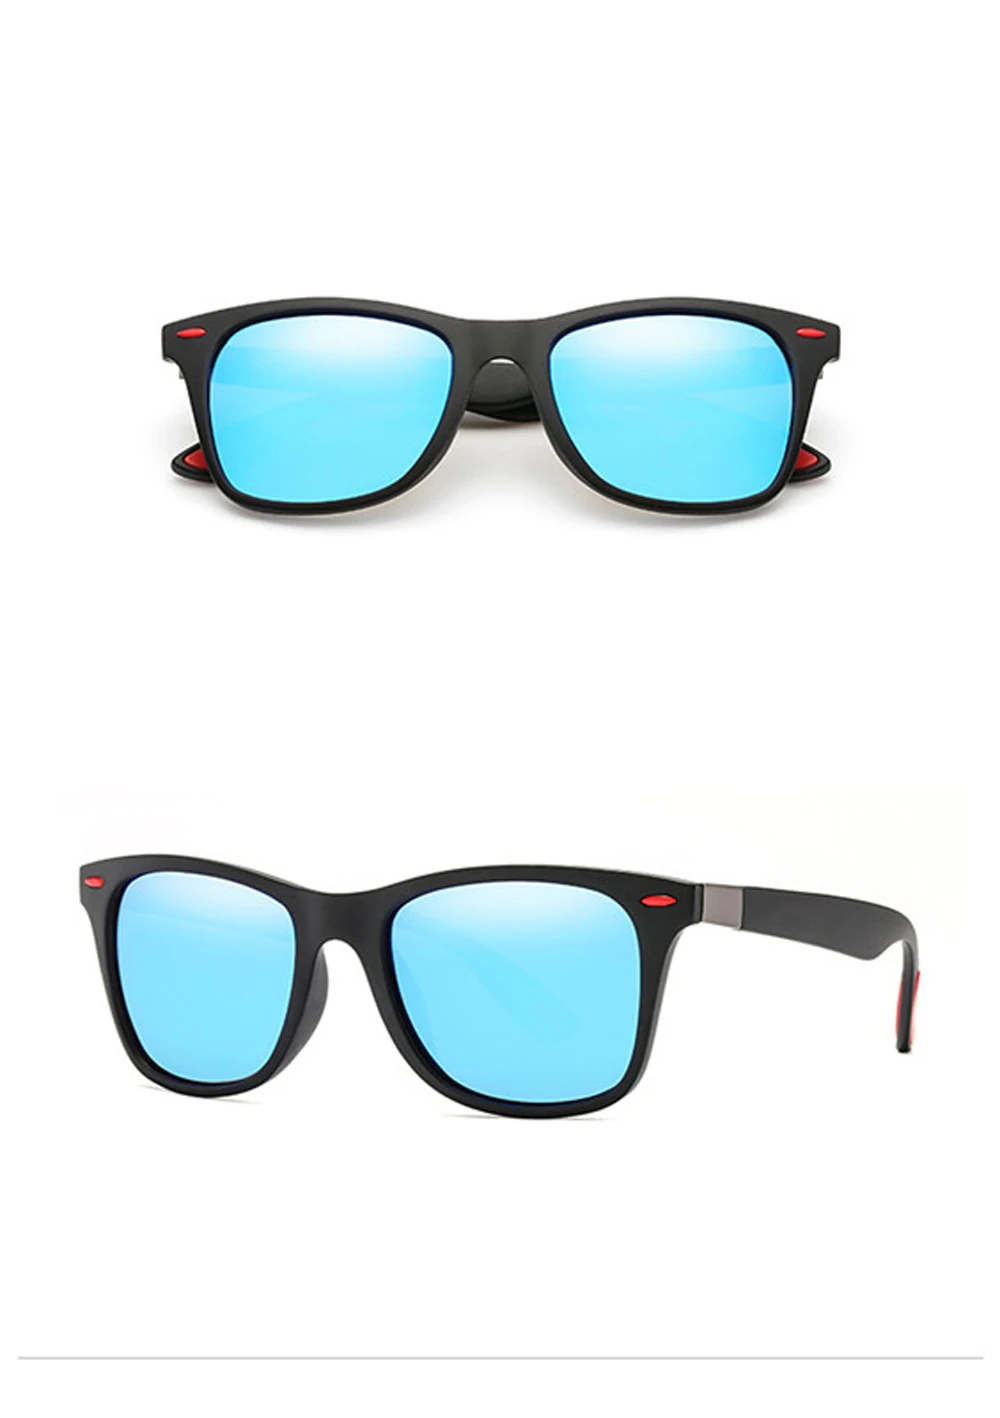 2020 New Brand Design Polarized Sunglasses Men Women Driving Shades Male Vintage Sun Glasses Spuare Mirror Summer UV400 Colors